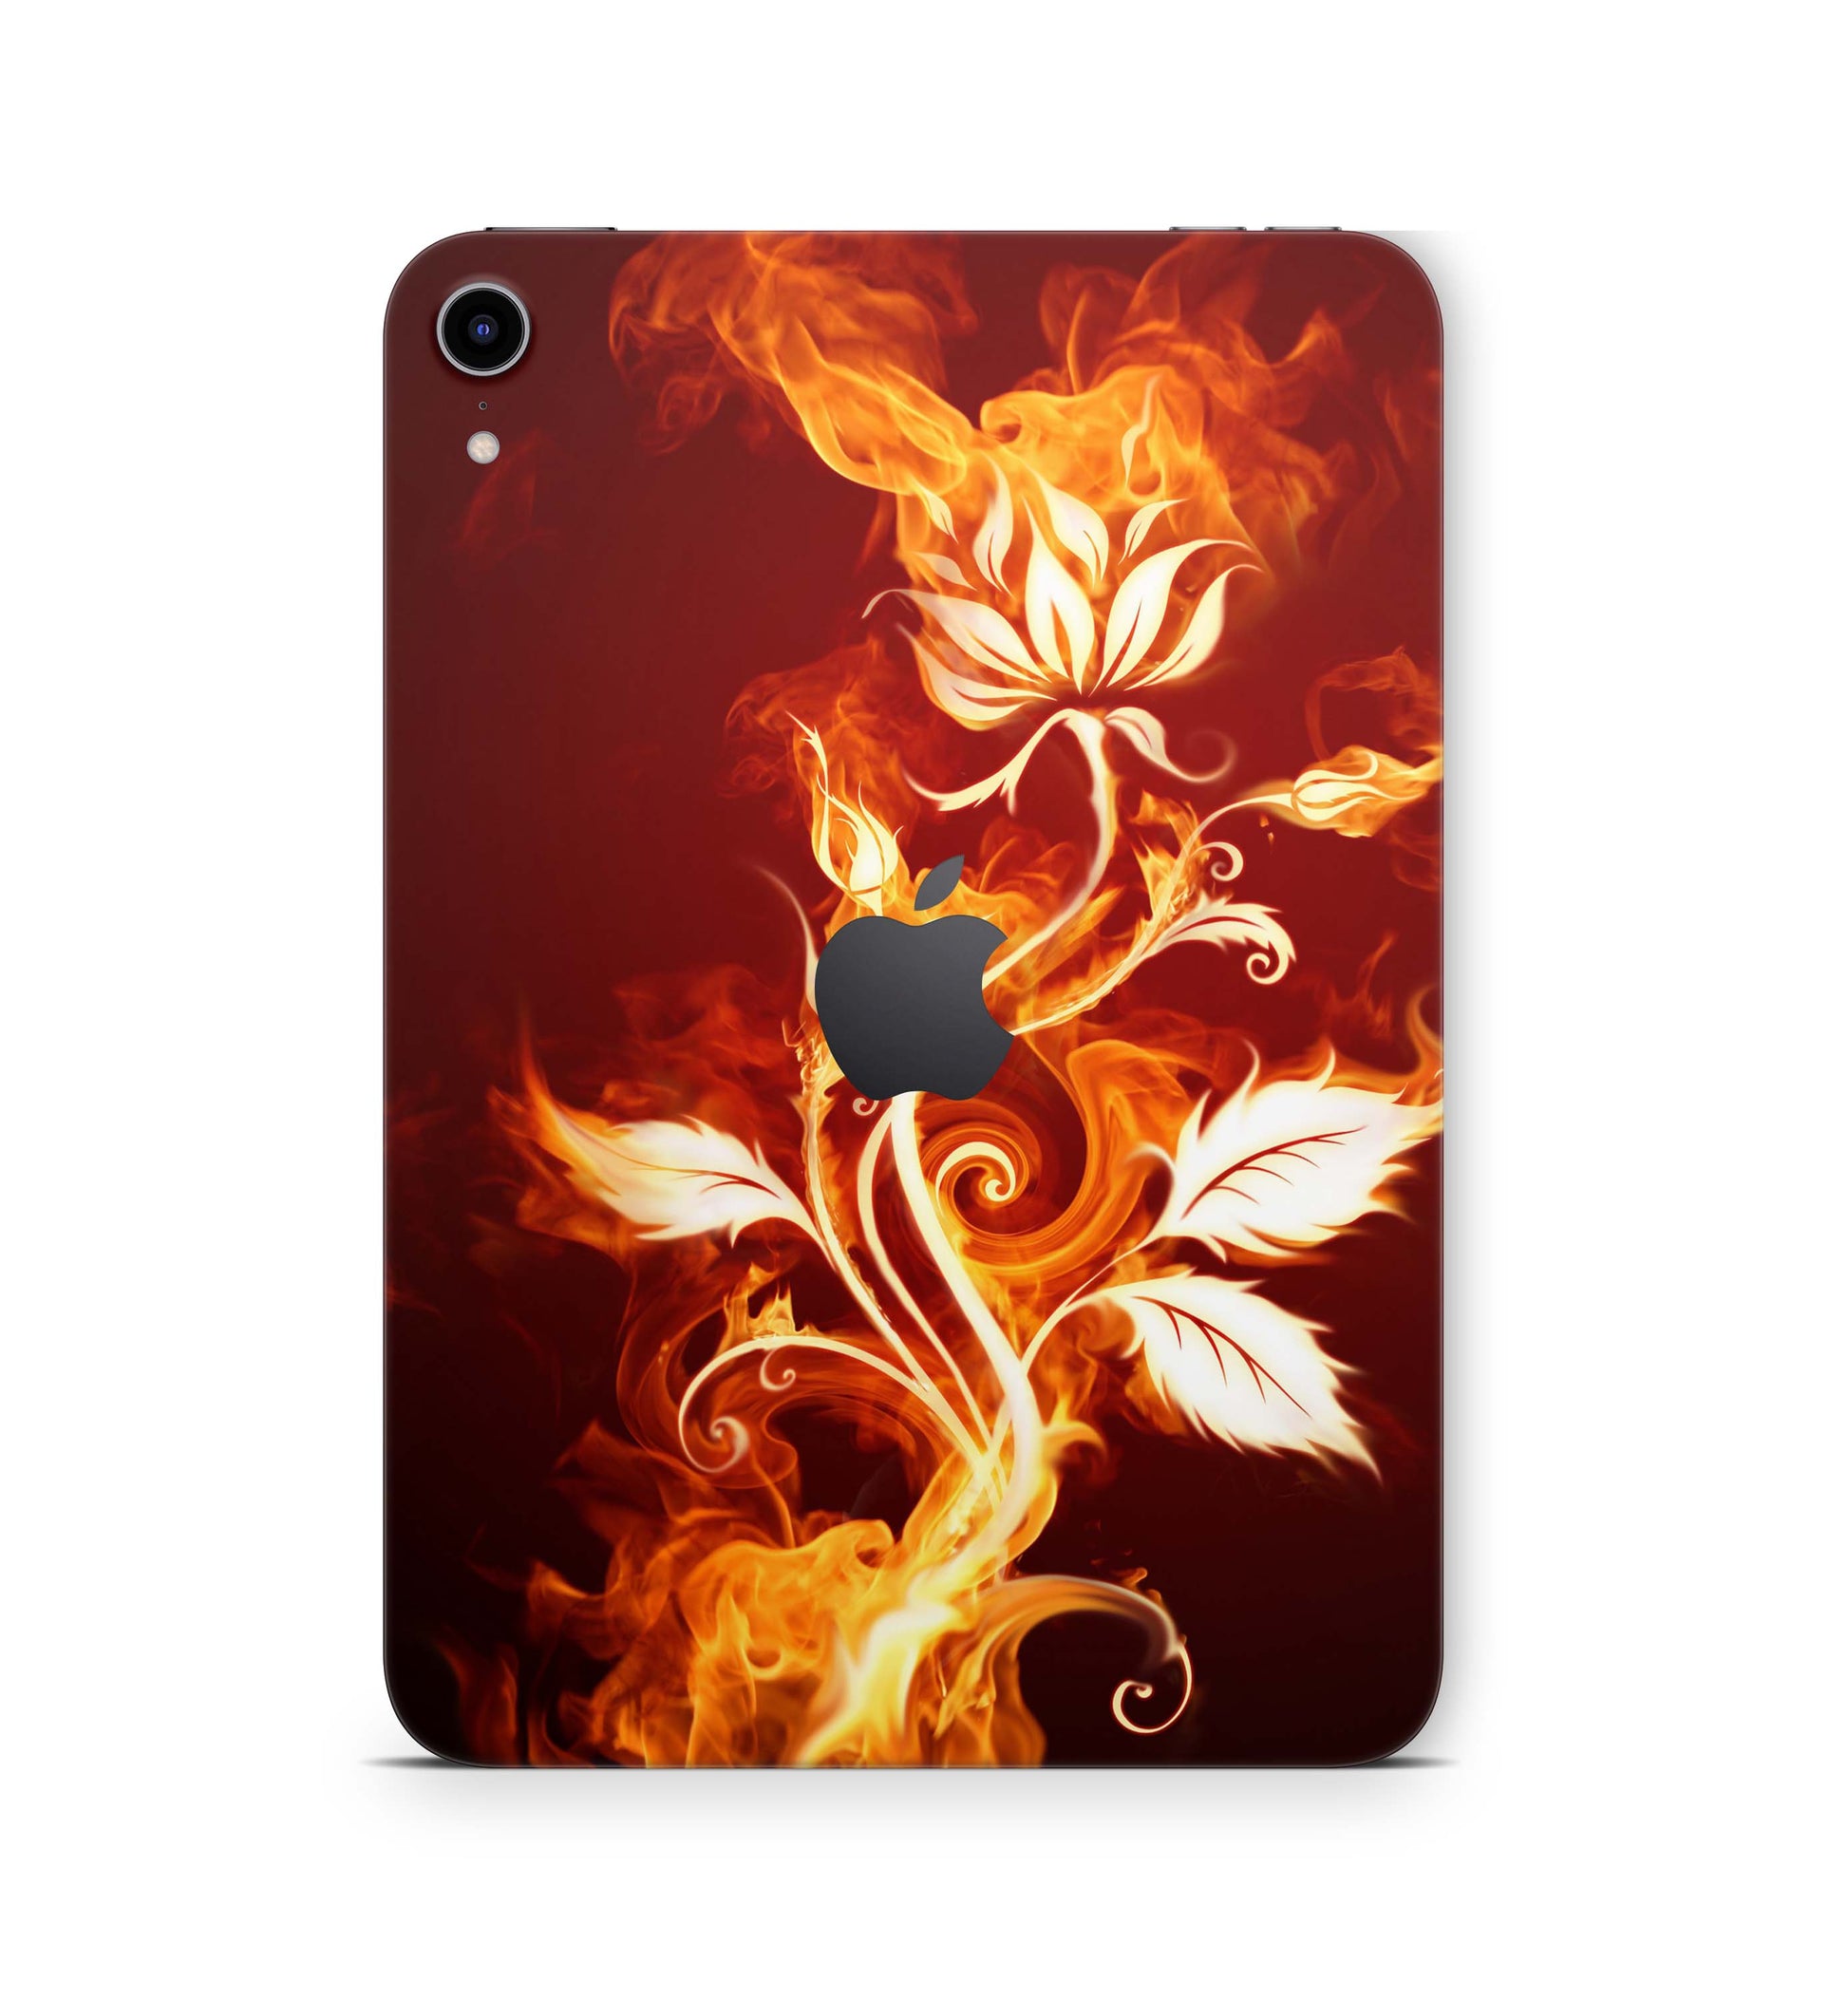 iPad Mini Skin Design Cover Folie Vinyl Skins & Wraps für alle iPad Mini Modelle Aufkleber Skins4u Flower-of-fire  